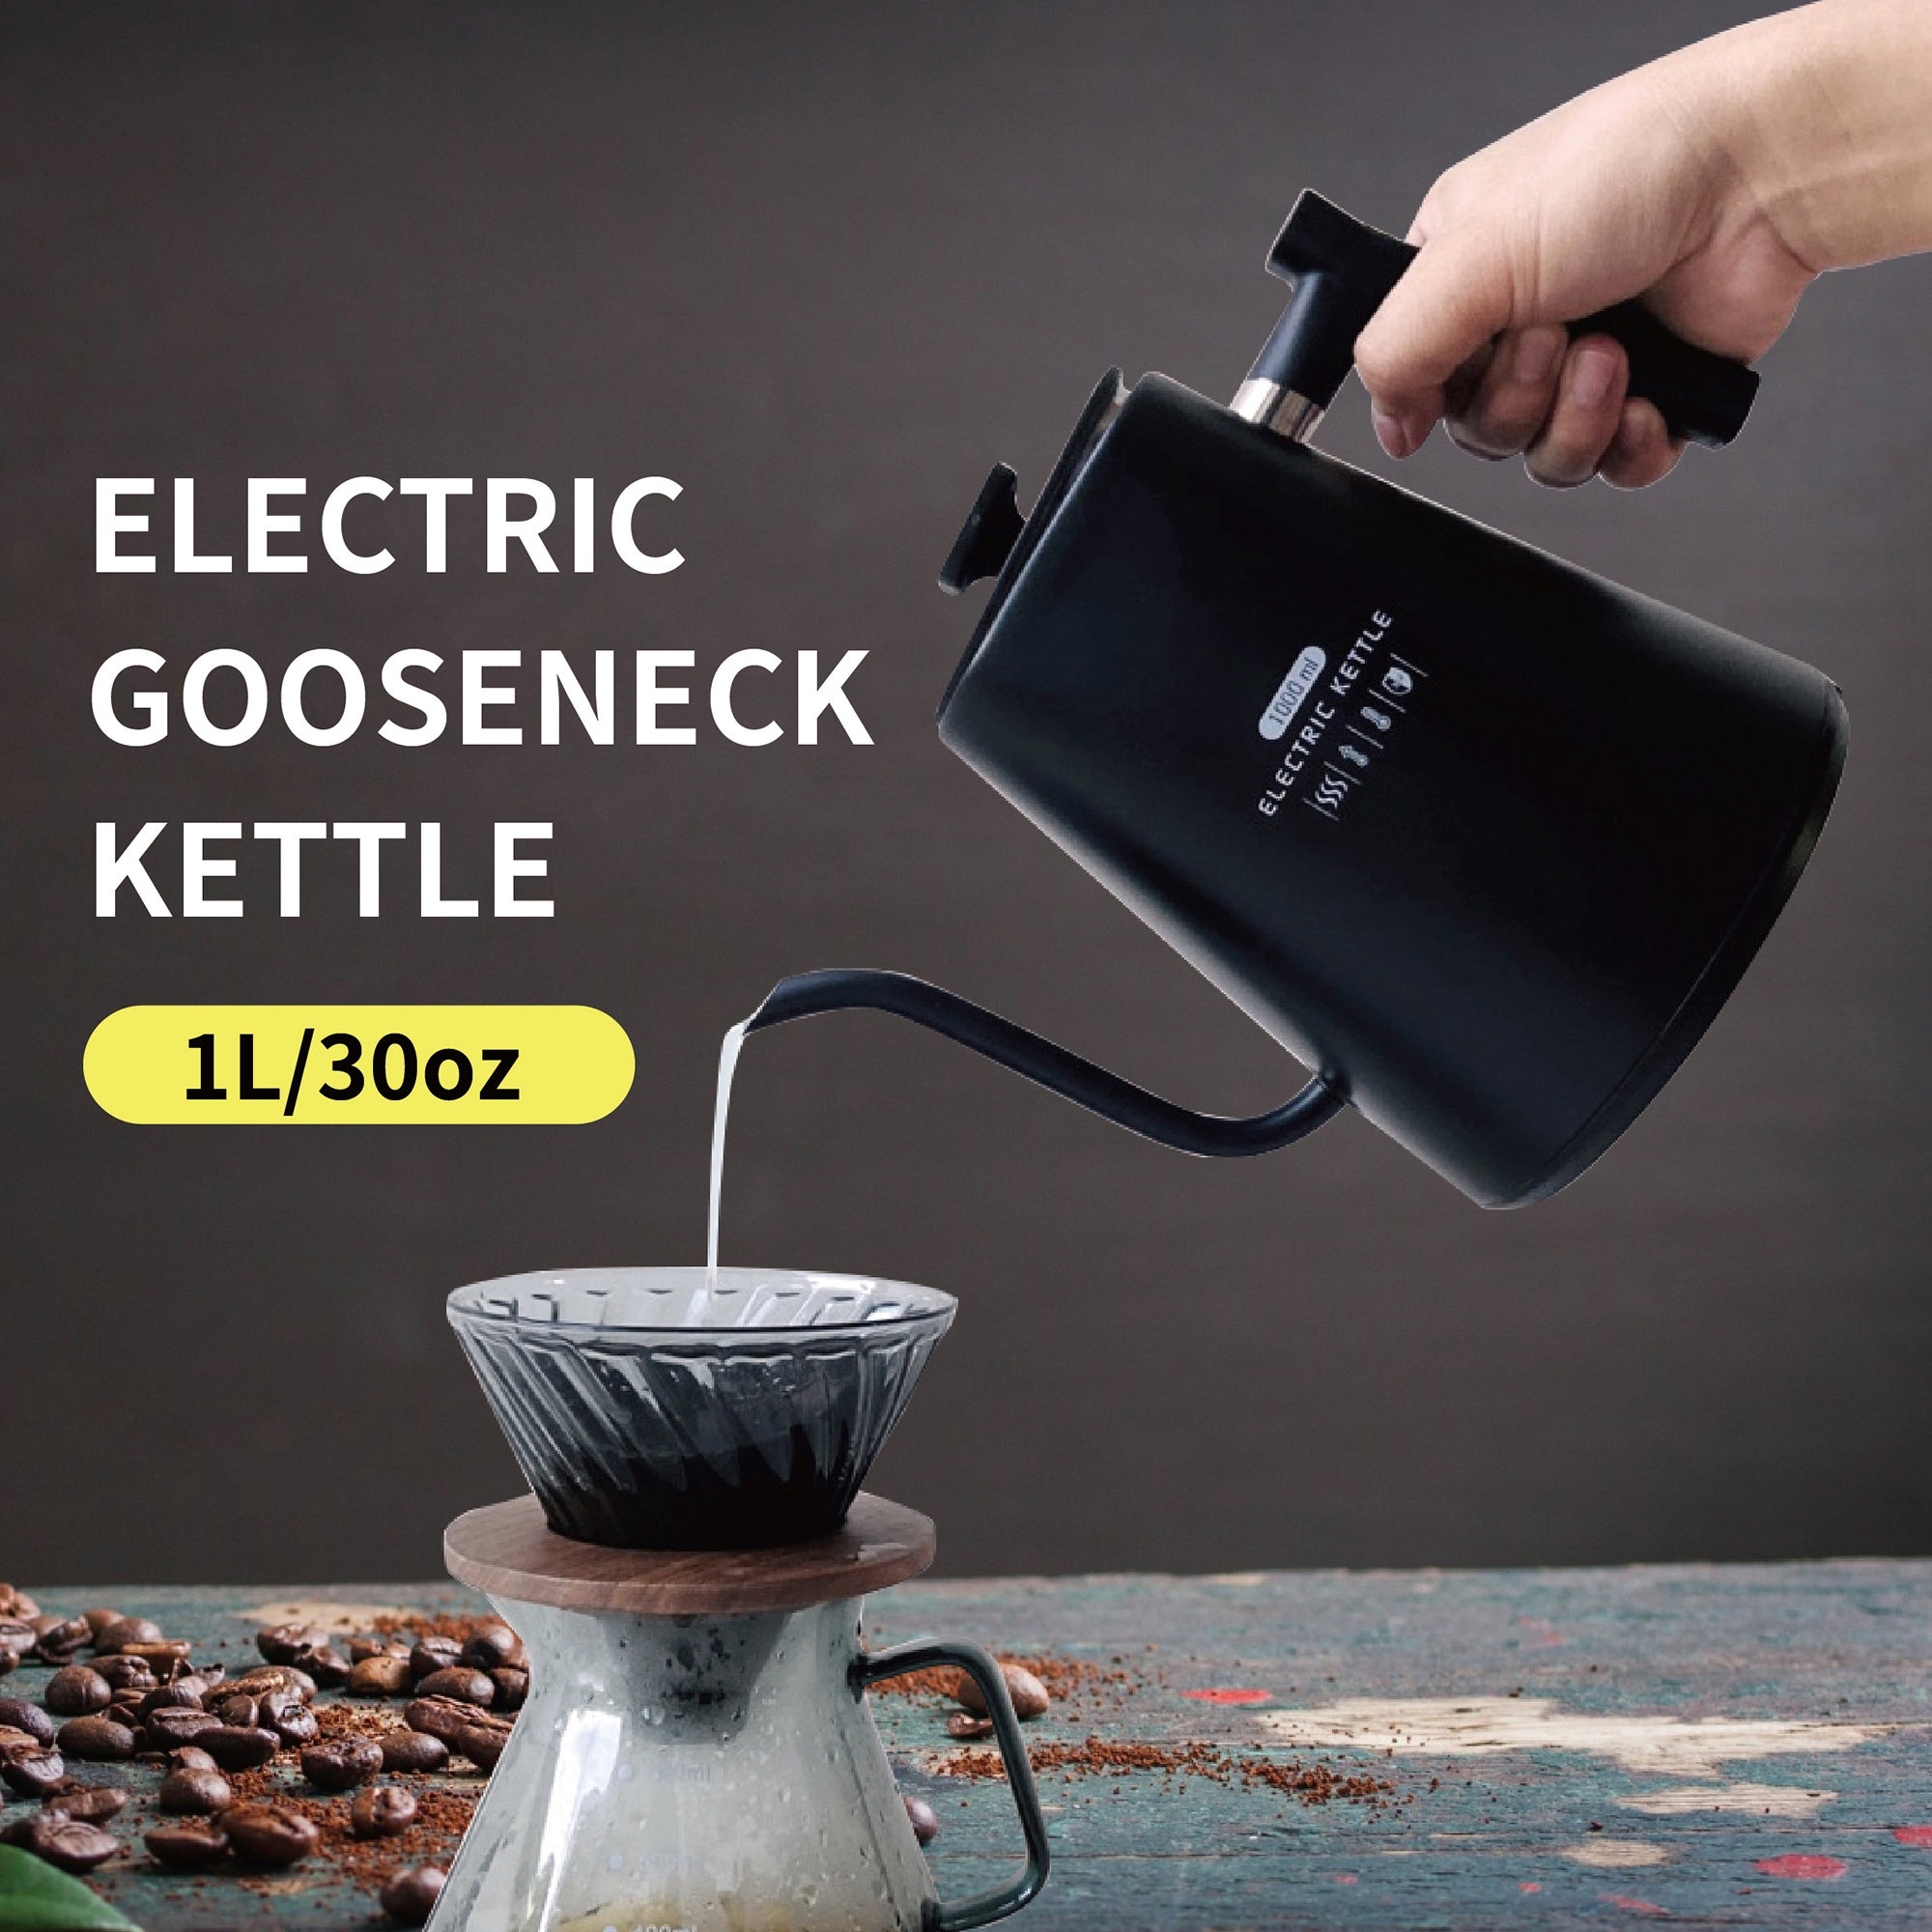 Electric Gooseneck Kettle - 1L